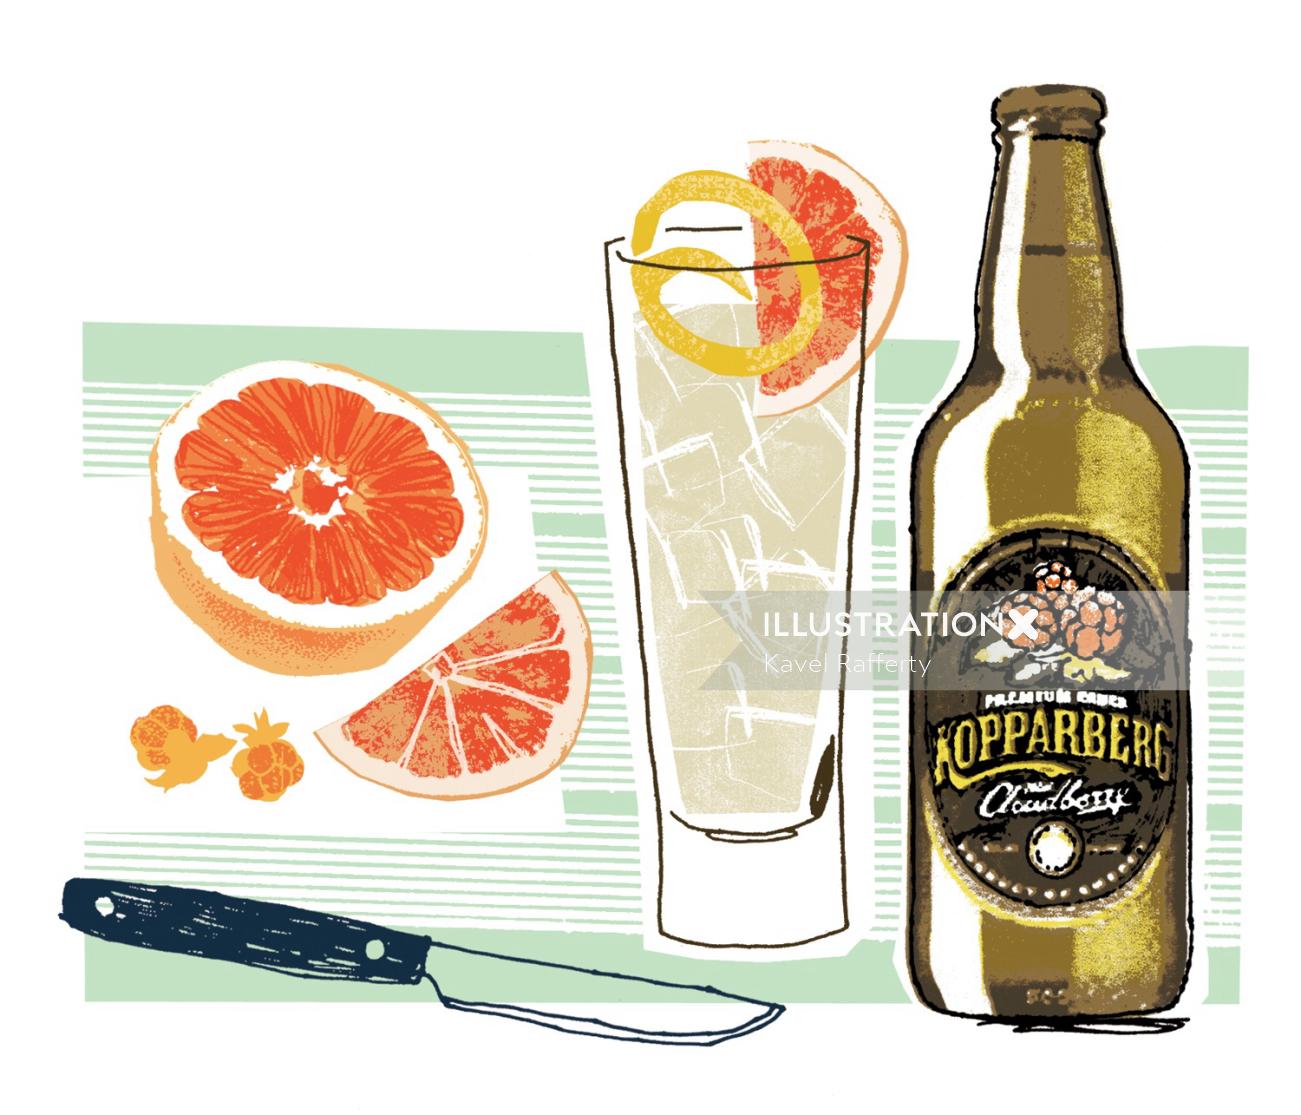 Kopparberg Cider illustration